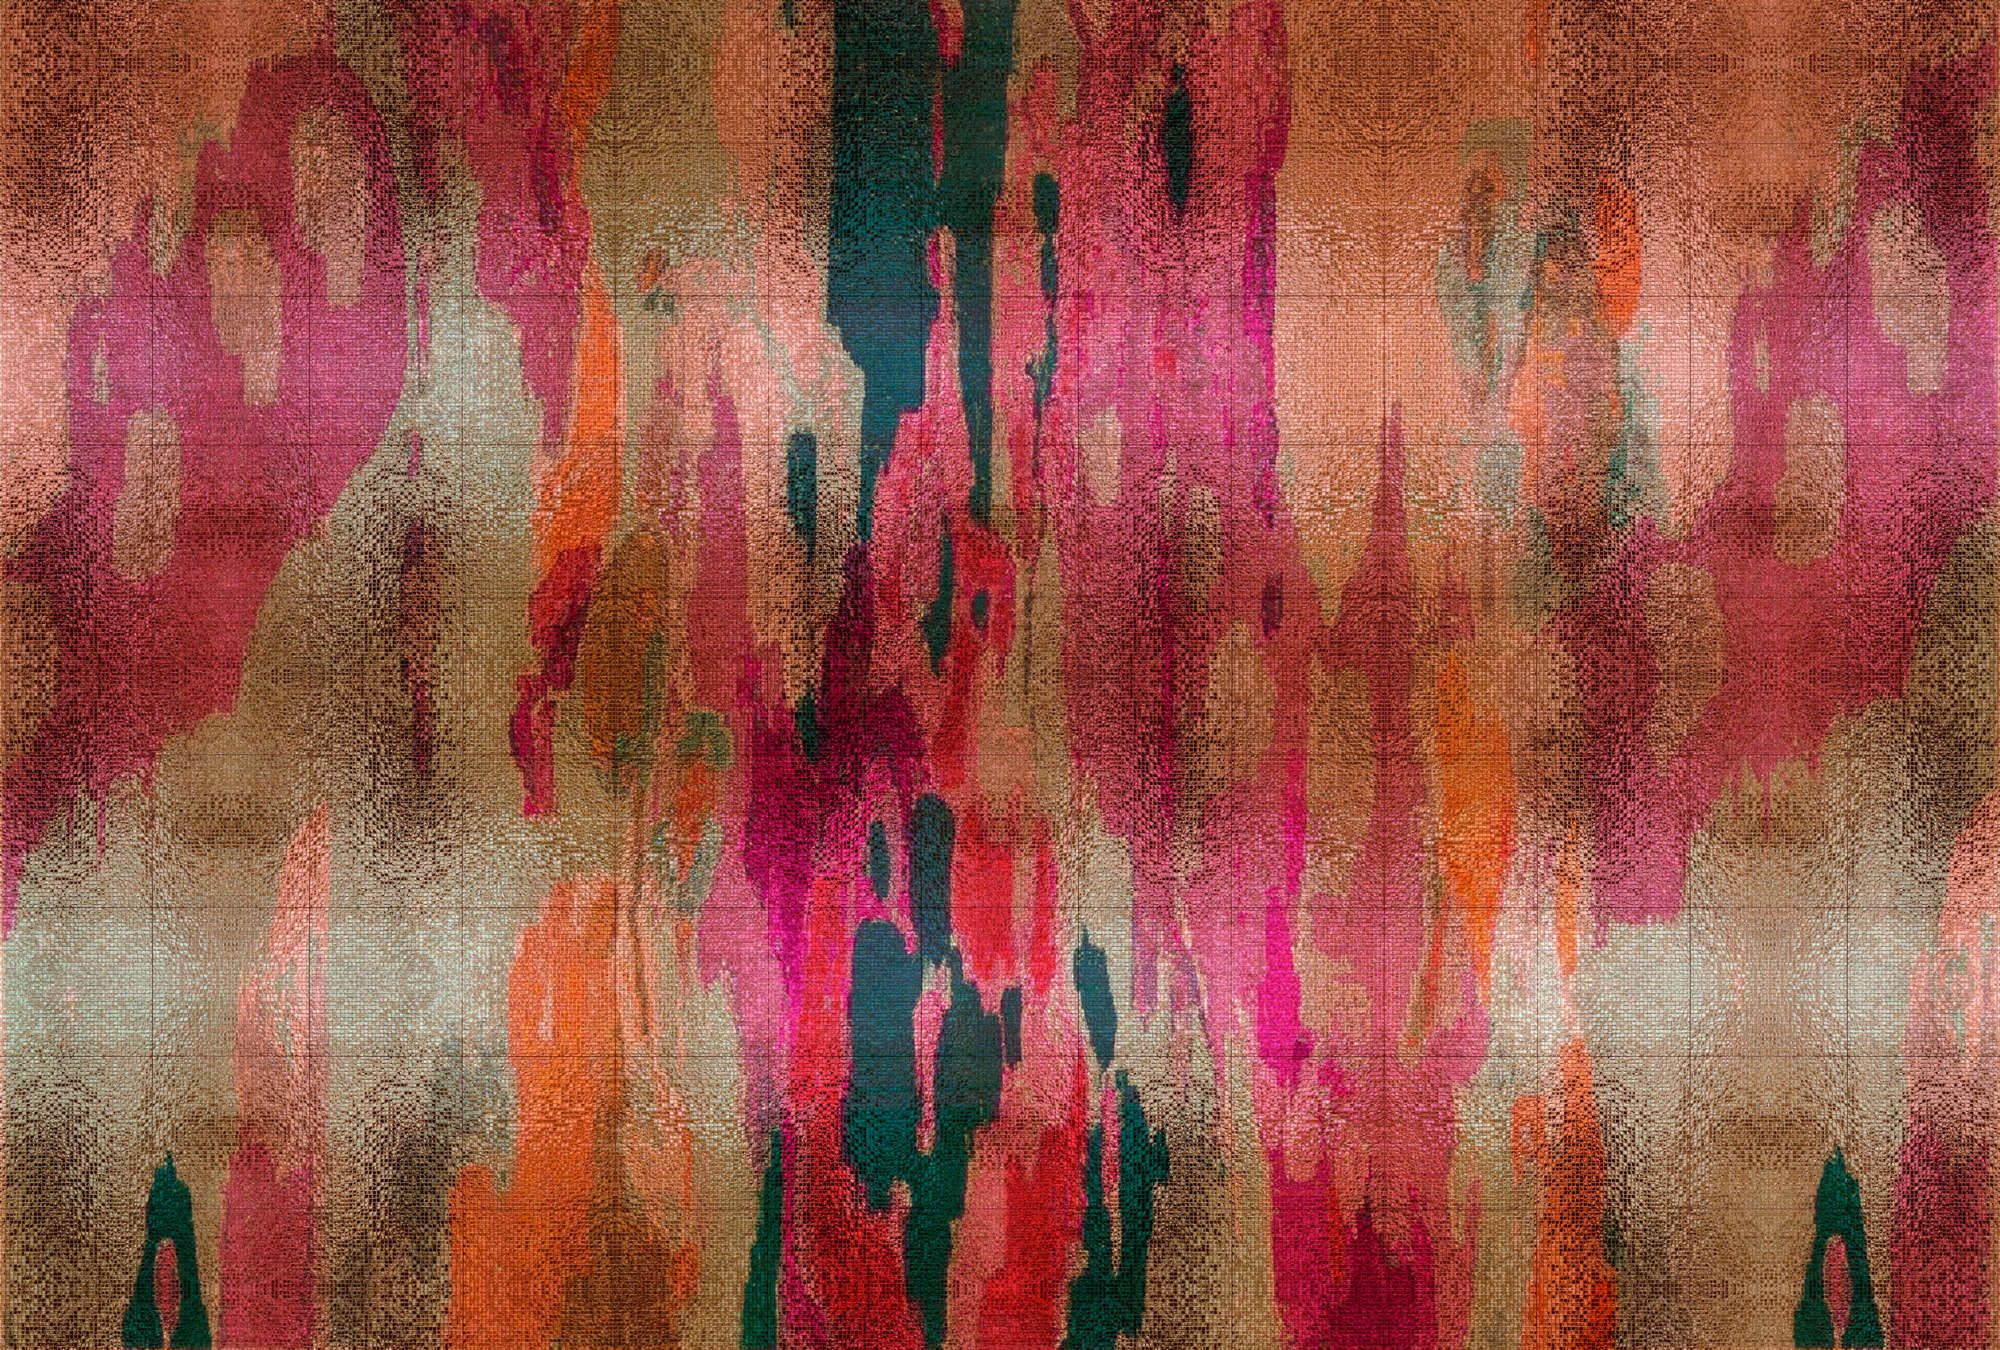             Digital behang »marielle 2« - Kleurverlopen violet, oranje, petrol met mozaïekstructuur - Gladde, licht parelmoerglanzende vliesstof
        